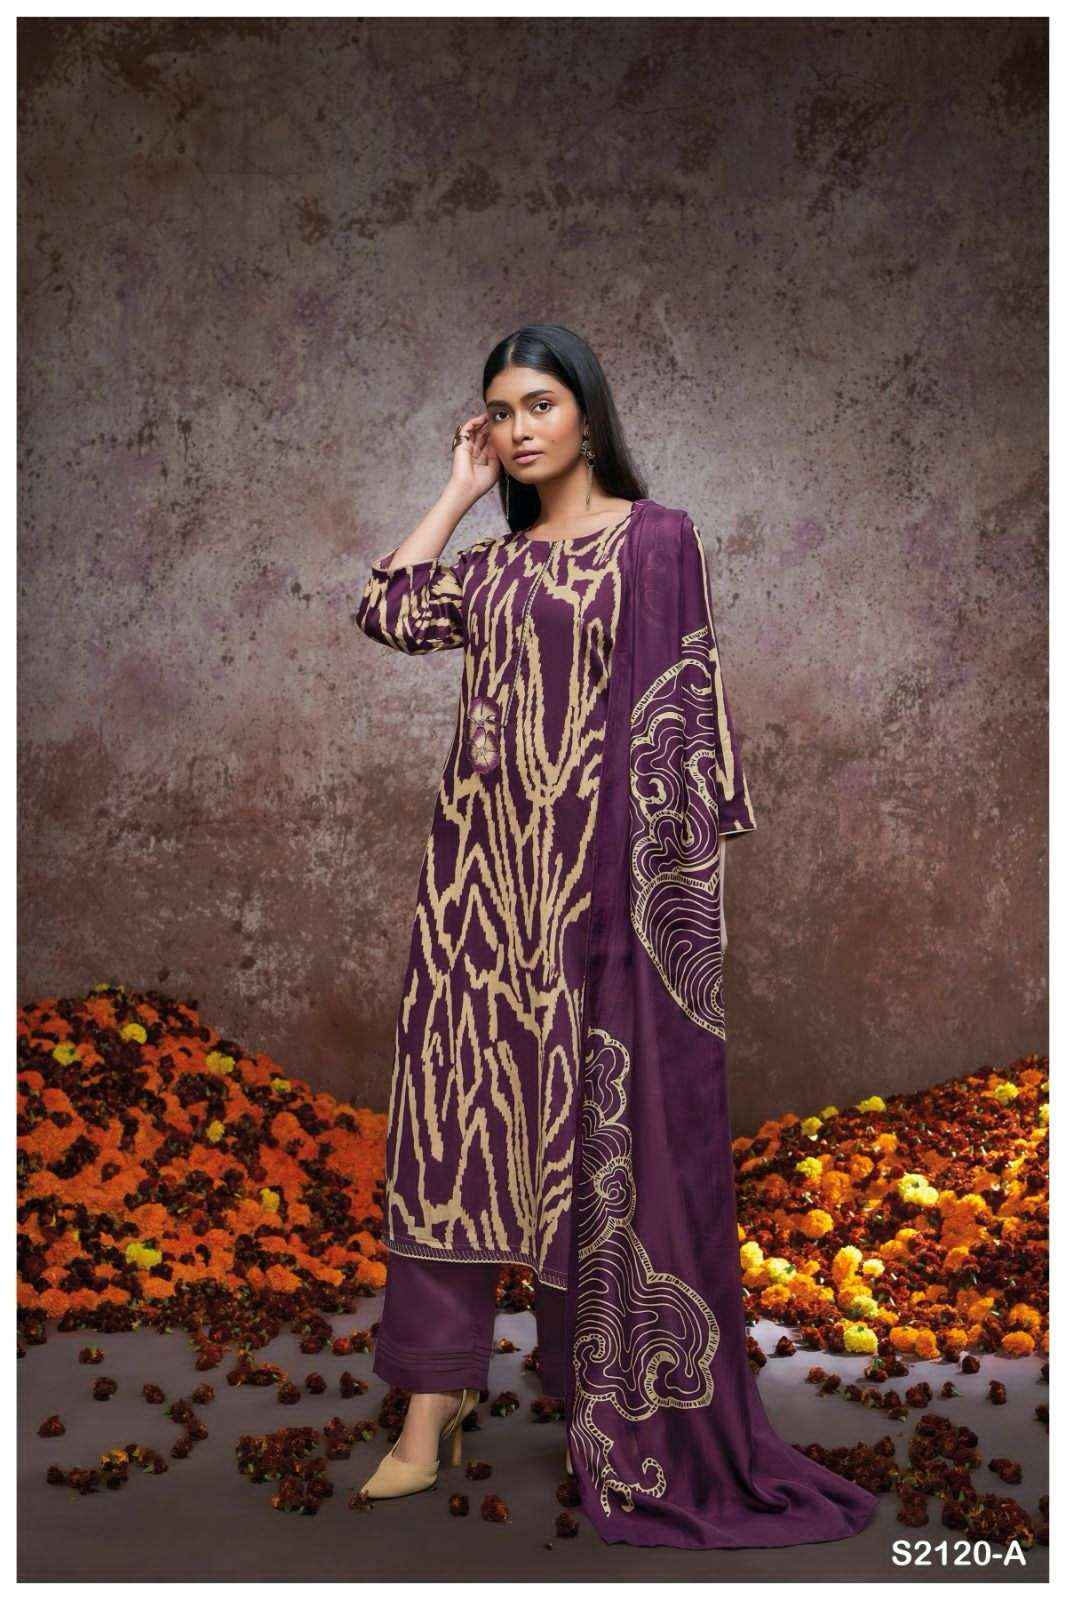 Ganga Orla 2120 Cotton Silk Dress Material 4 pcs Catalogue